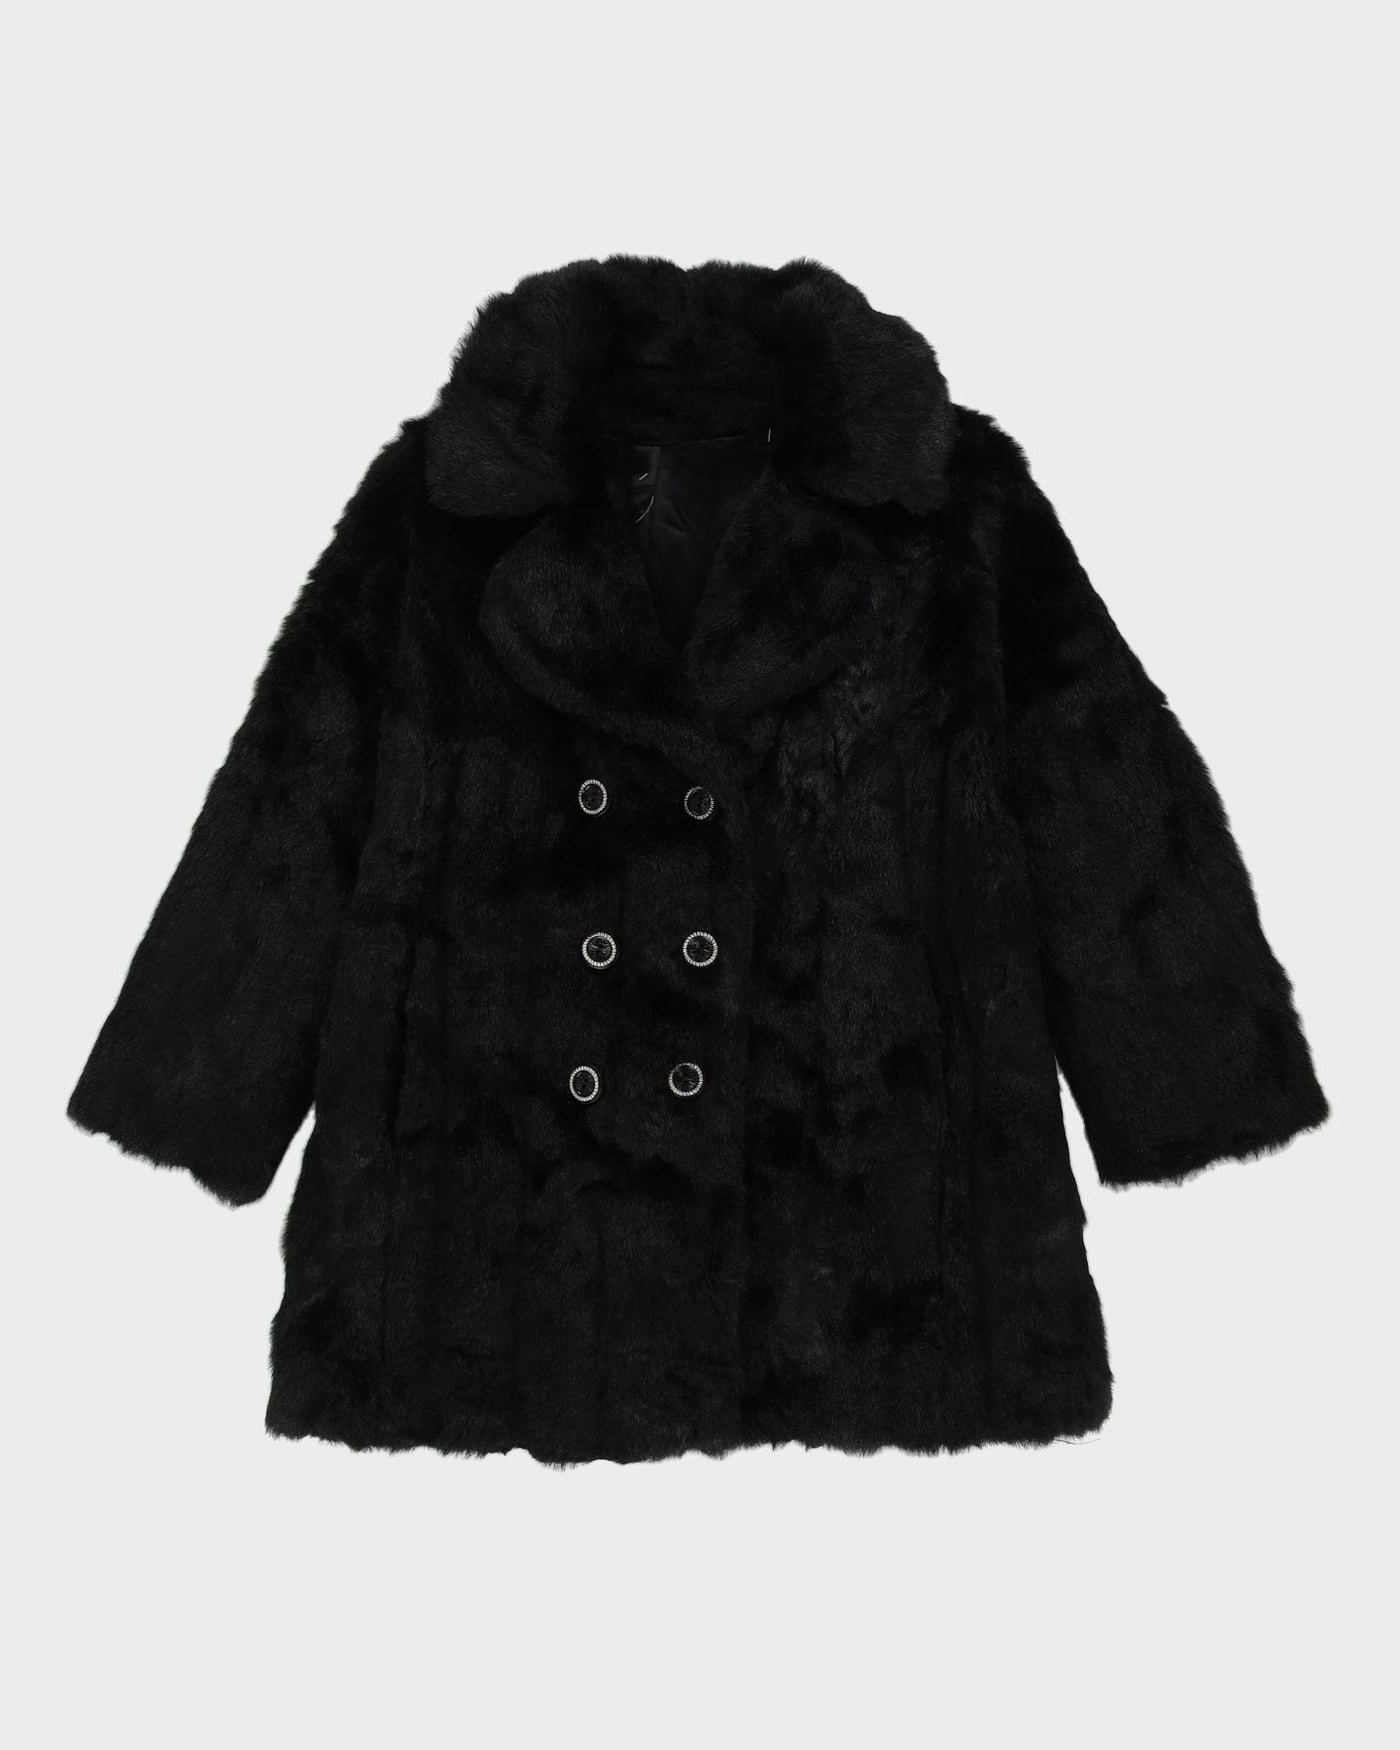 Black Faux Fur Jacket - M